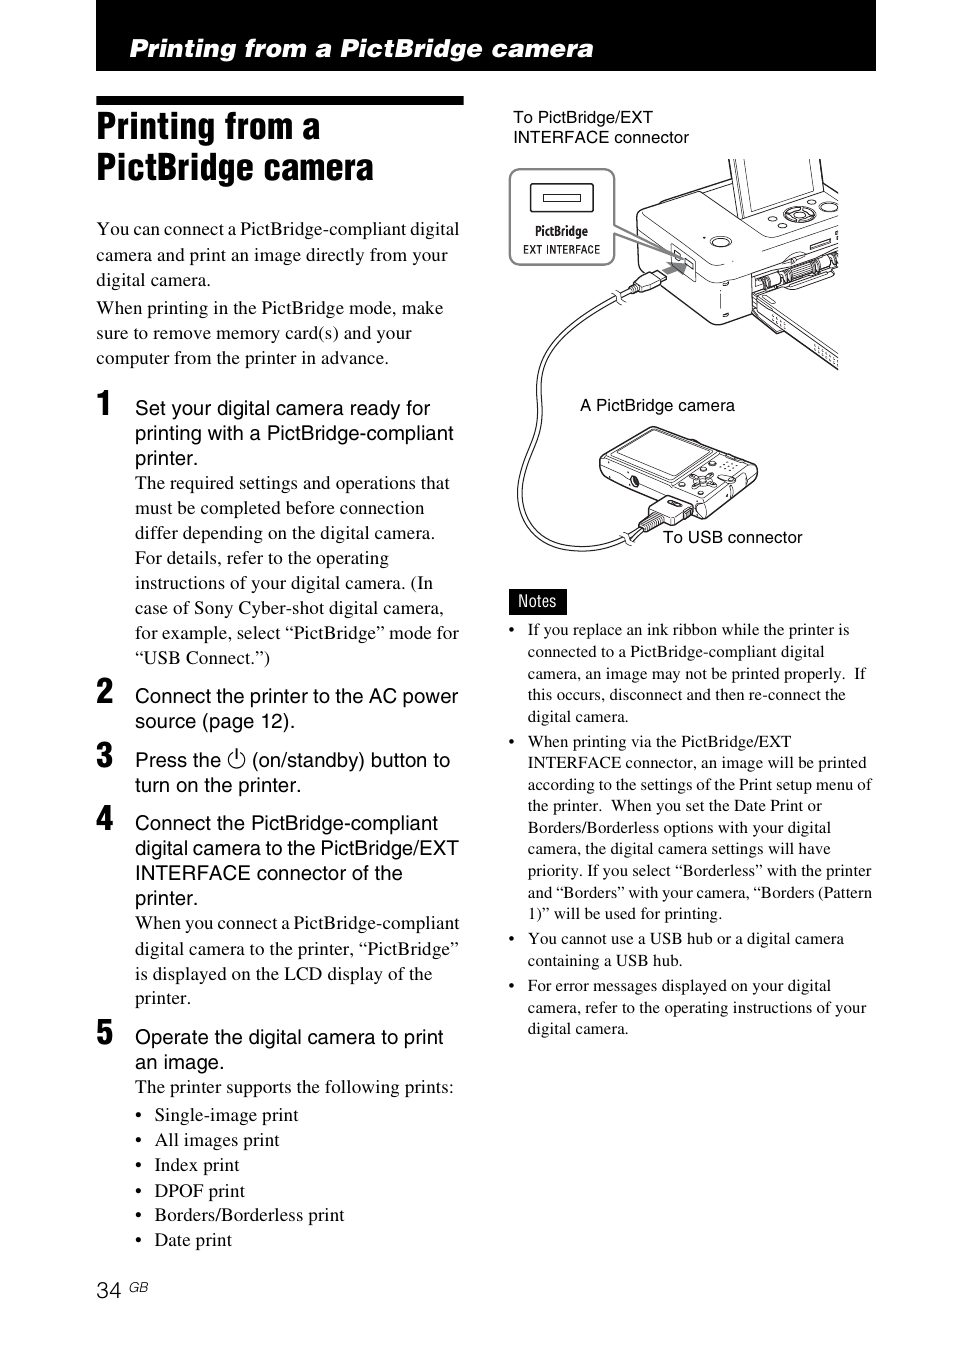 Printing from a pictbridge camera, Printing from a pictbridge, Camera | Sony DPP-FP77 User Manual | Page 34 / 72